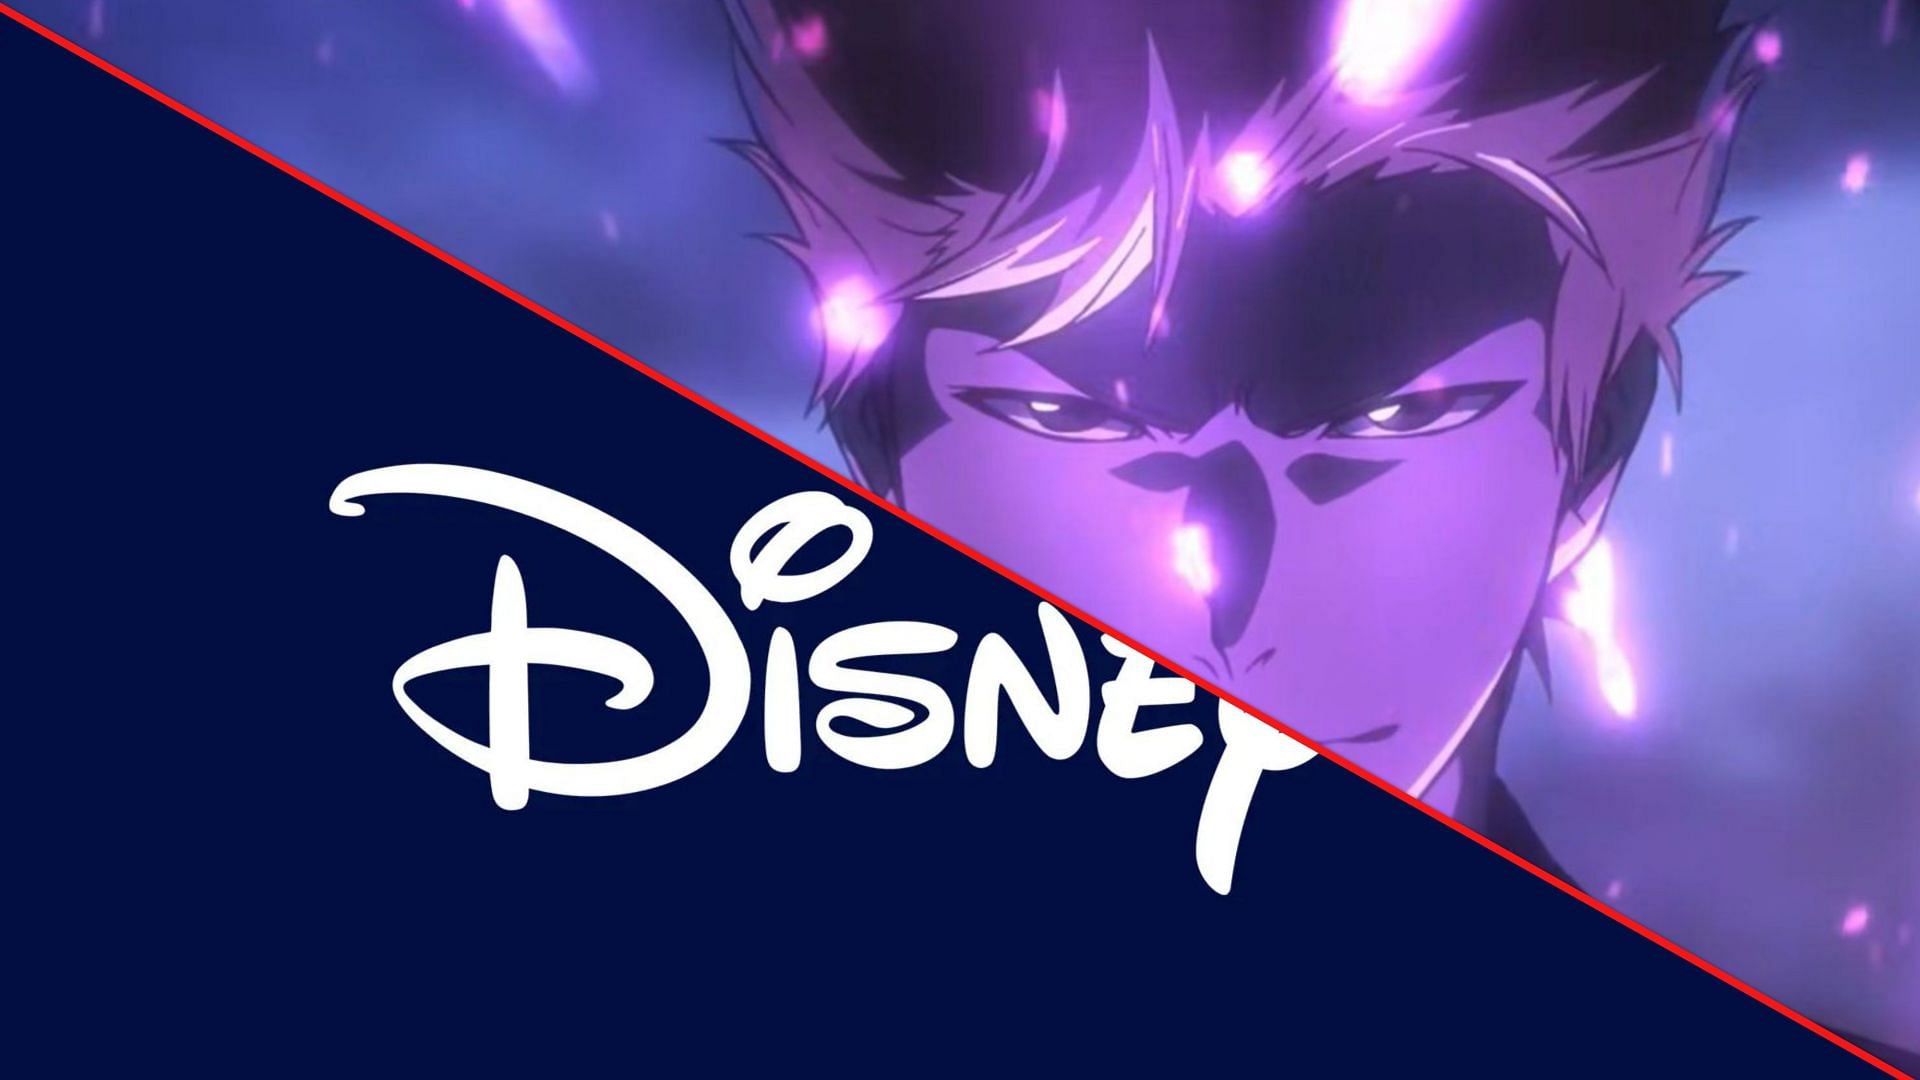 Disney+ gibt Streaming-Termin für Bleach: Thousand-Year Blood War bekannt  (Update) - Crunchyroll News